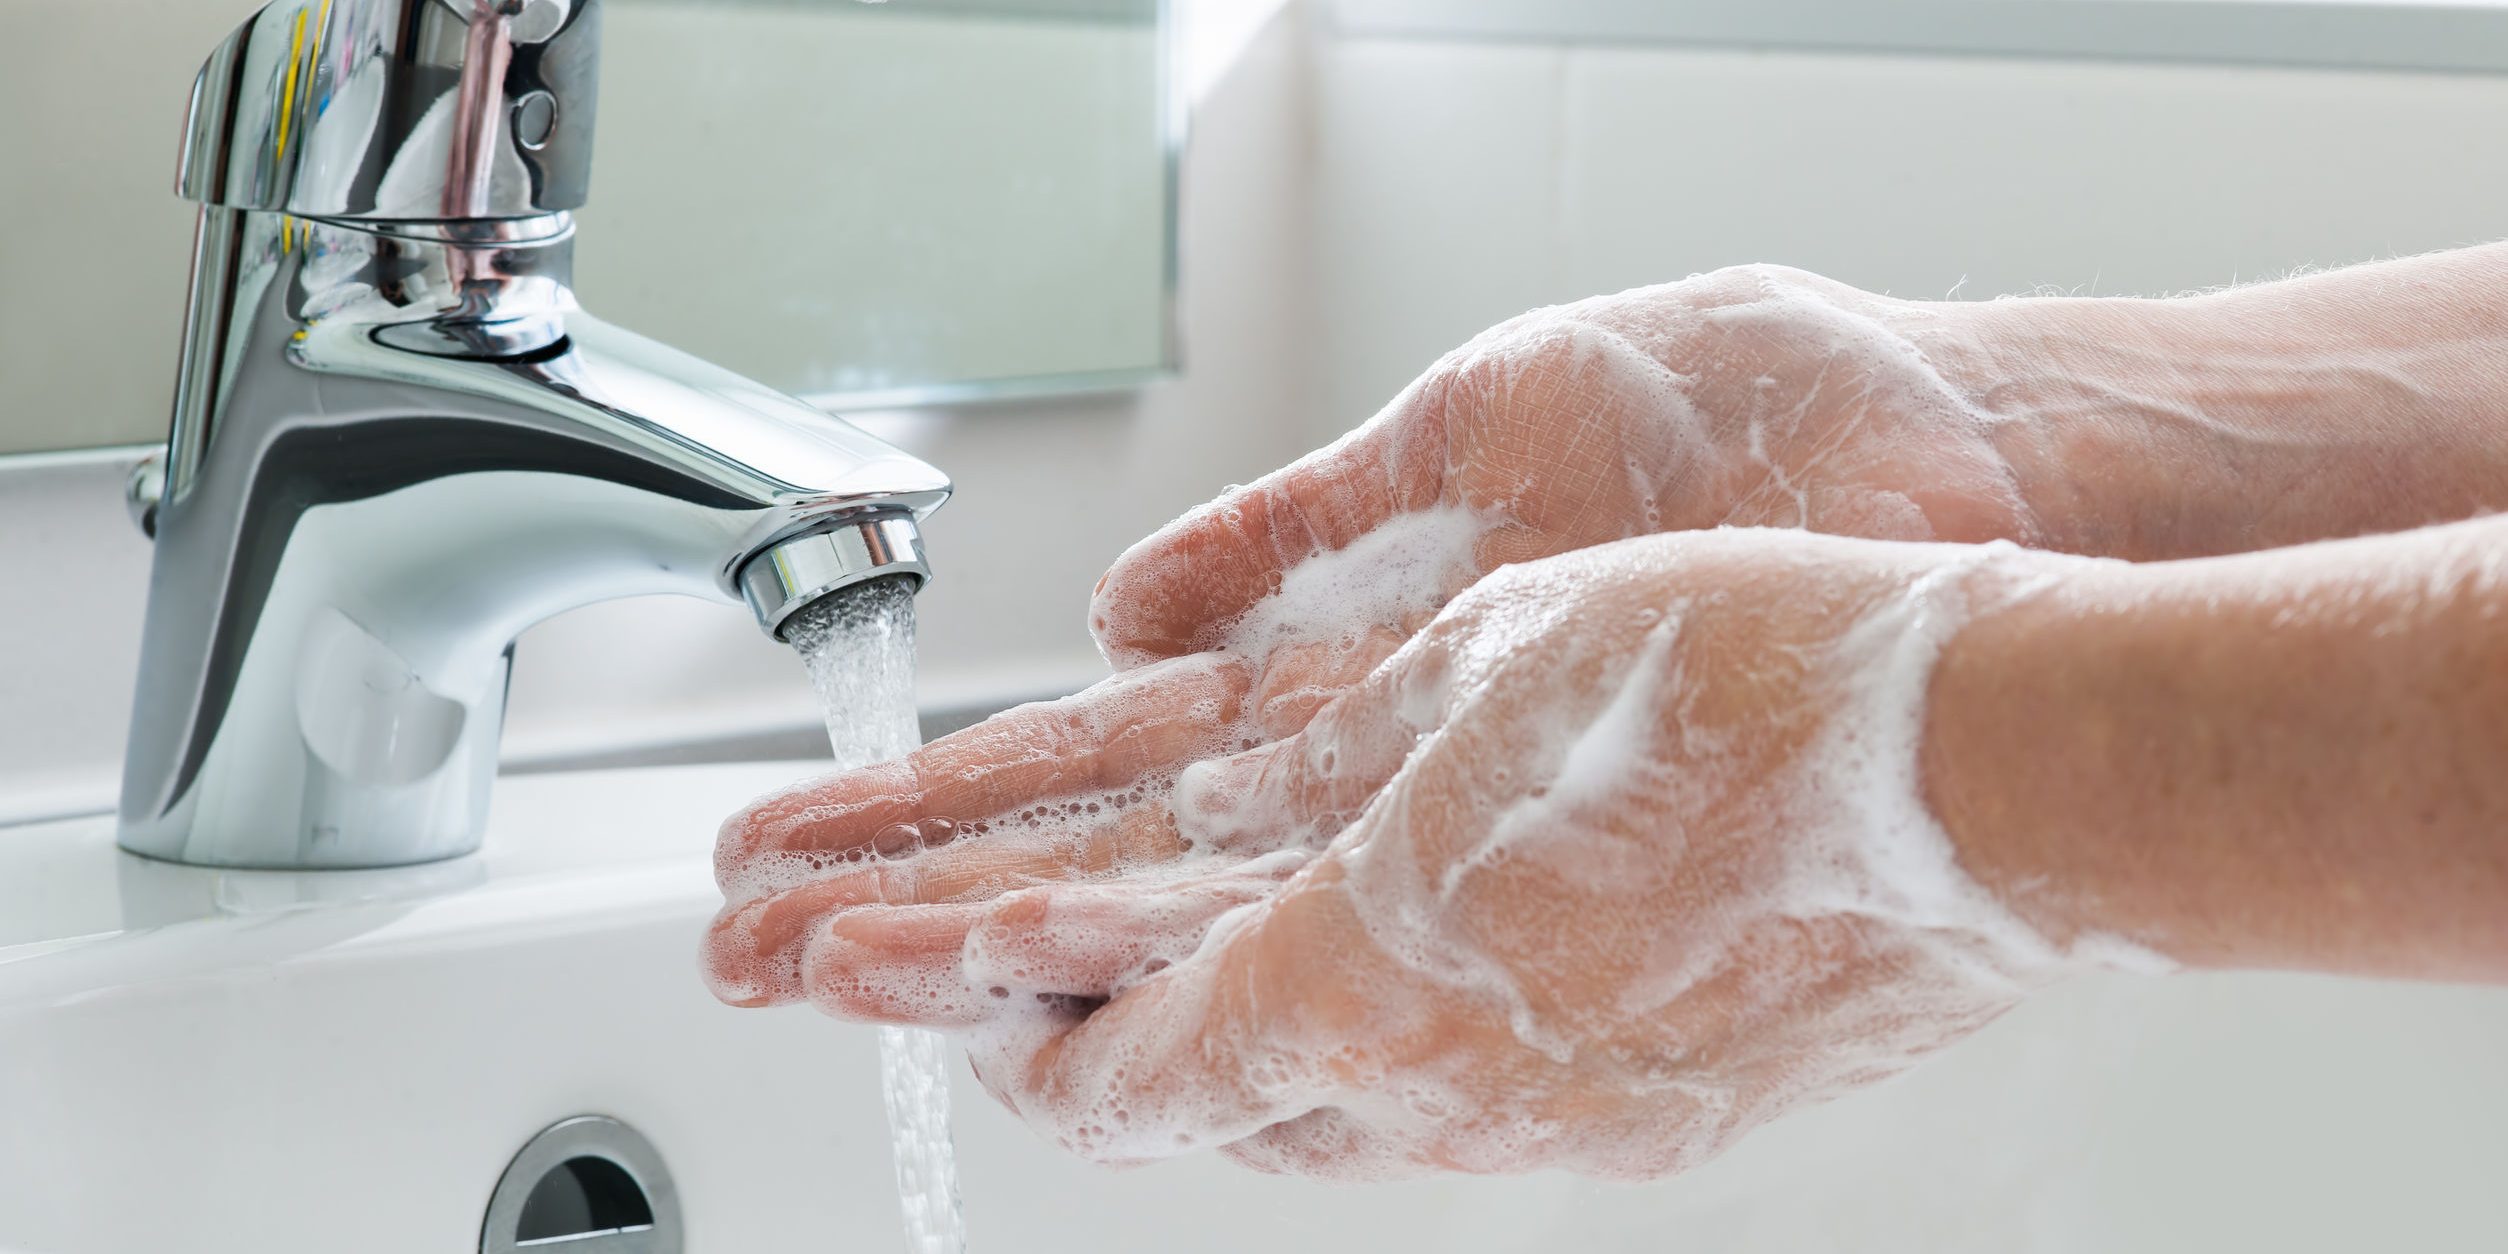 Lávate las manos a menudo para evitar el contagio. Foto: www.ocu.org